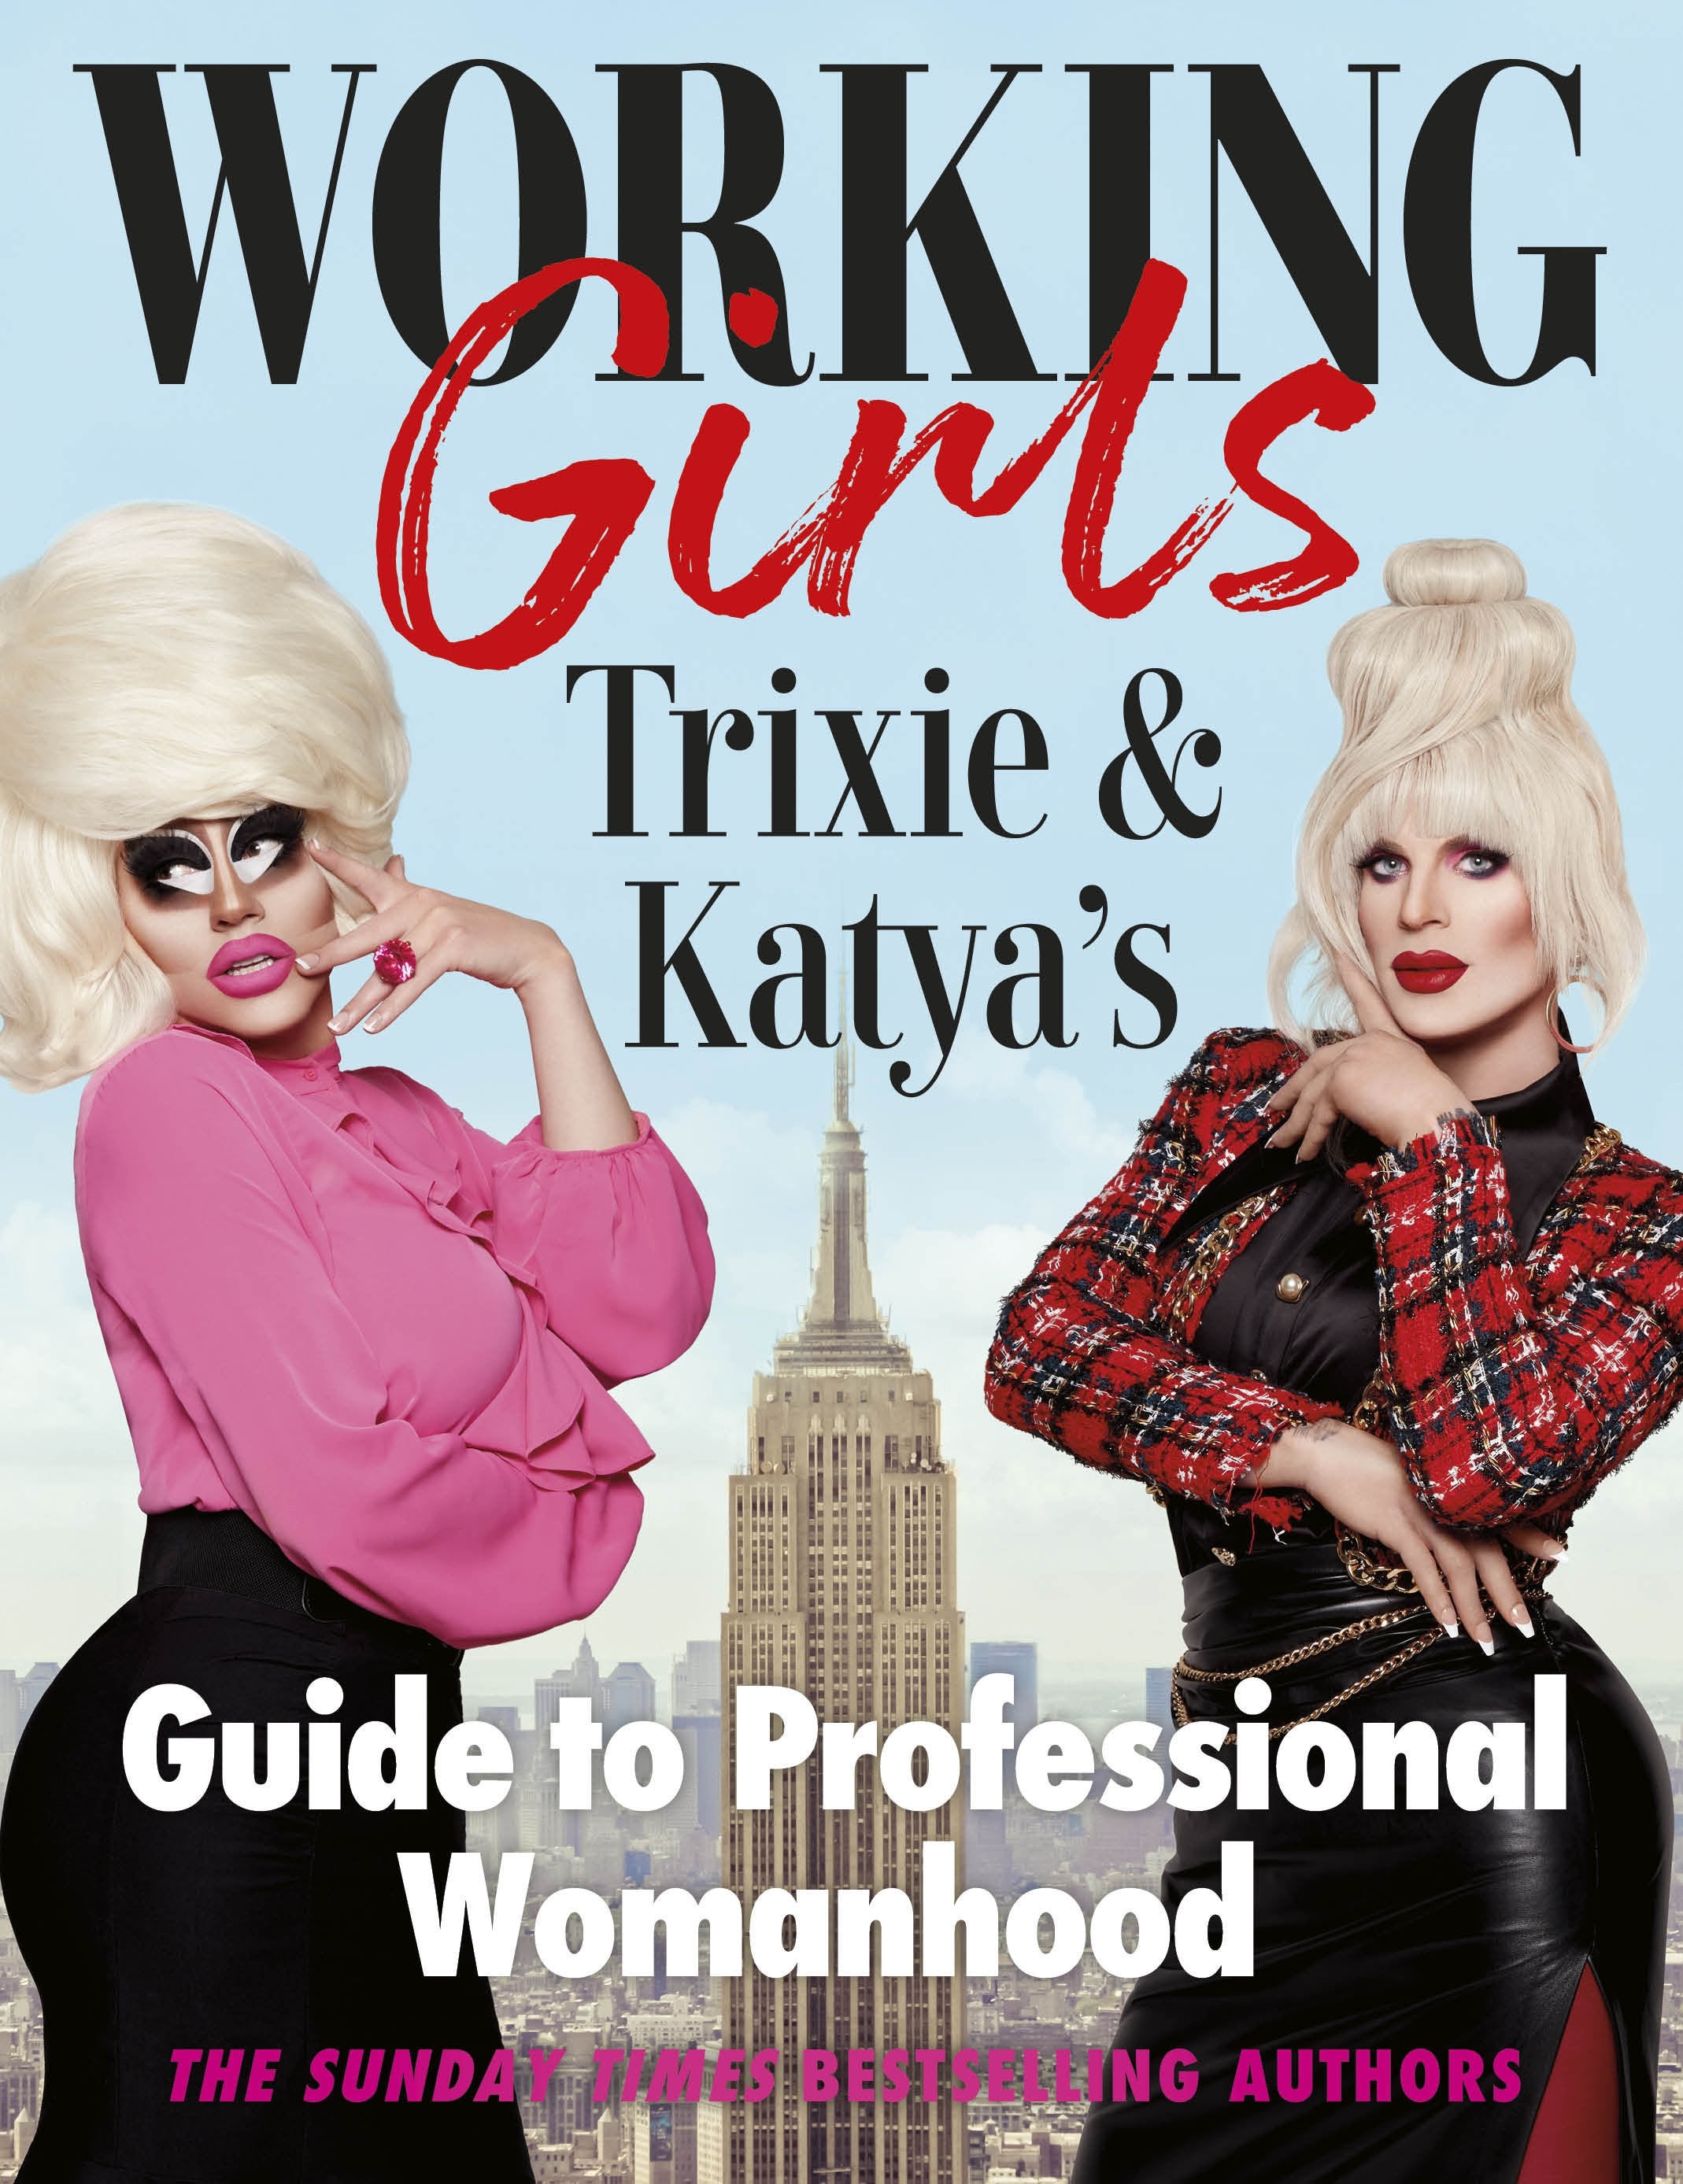 Book “Working Girls” by Trixie Mattel, Katya Zamolodchikova — October 27, 2022